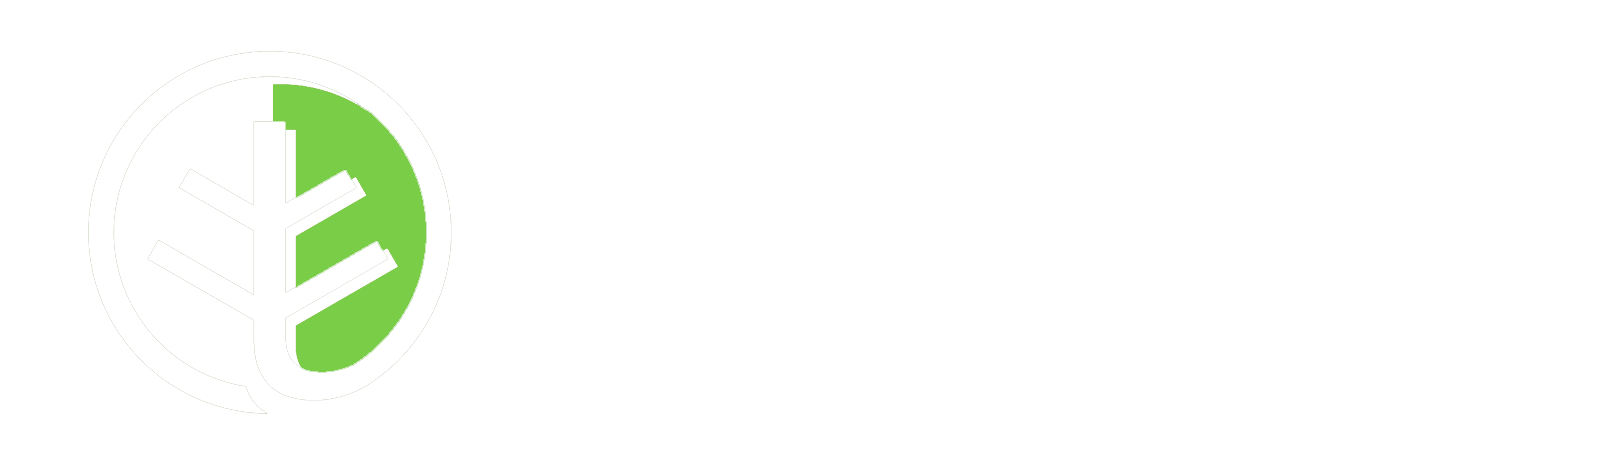 Zigger.pl Sp. z o.o.